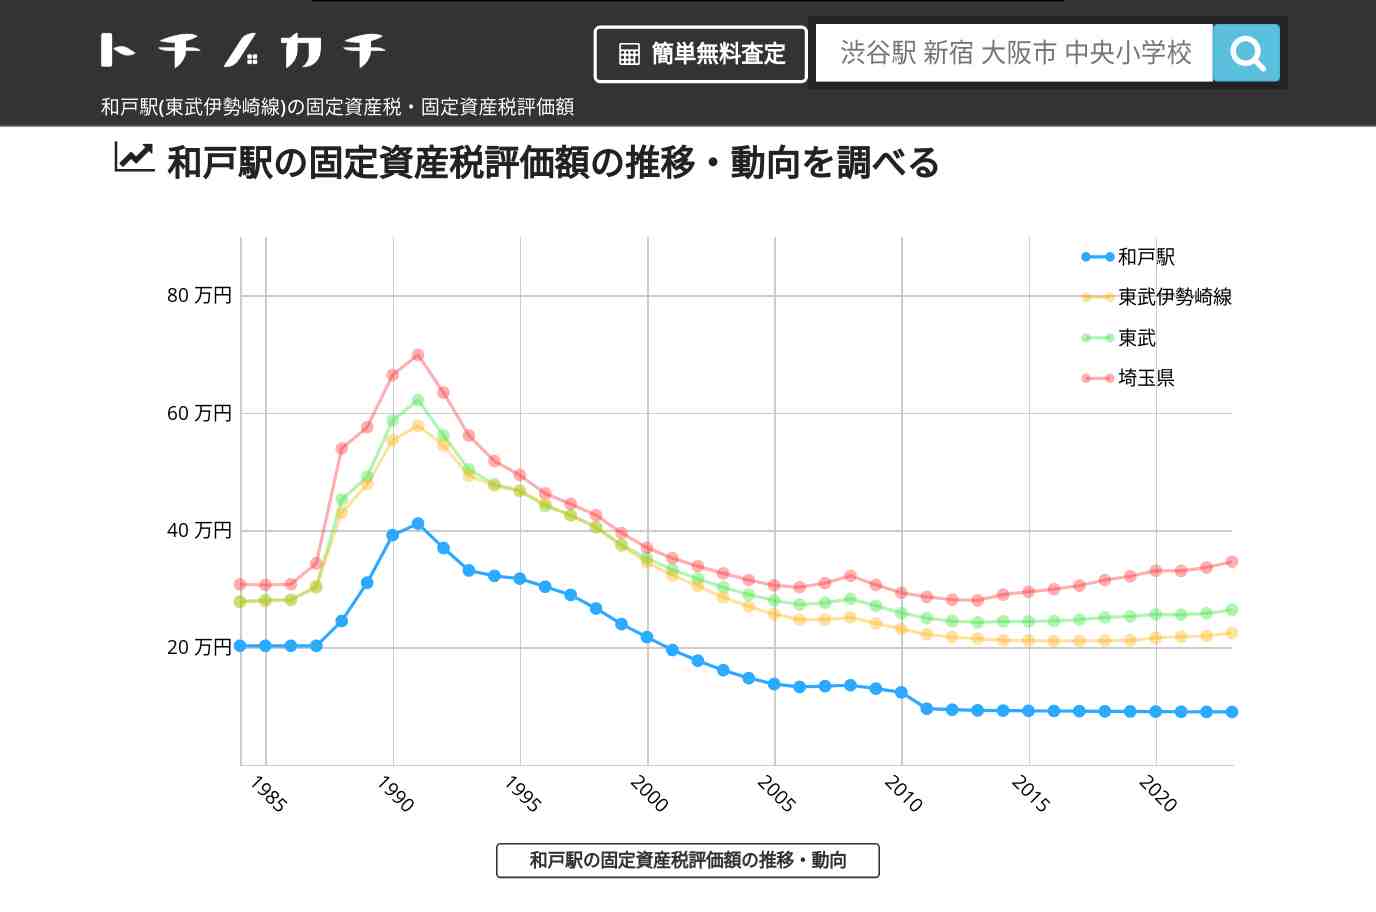 和戸駅(東武伊勢崎線)の固定資産税・固定資産税評価額 | トチノカチ